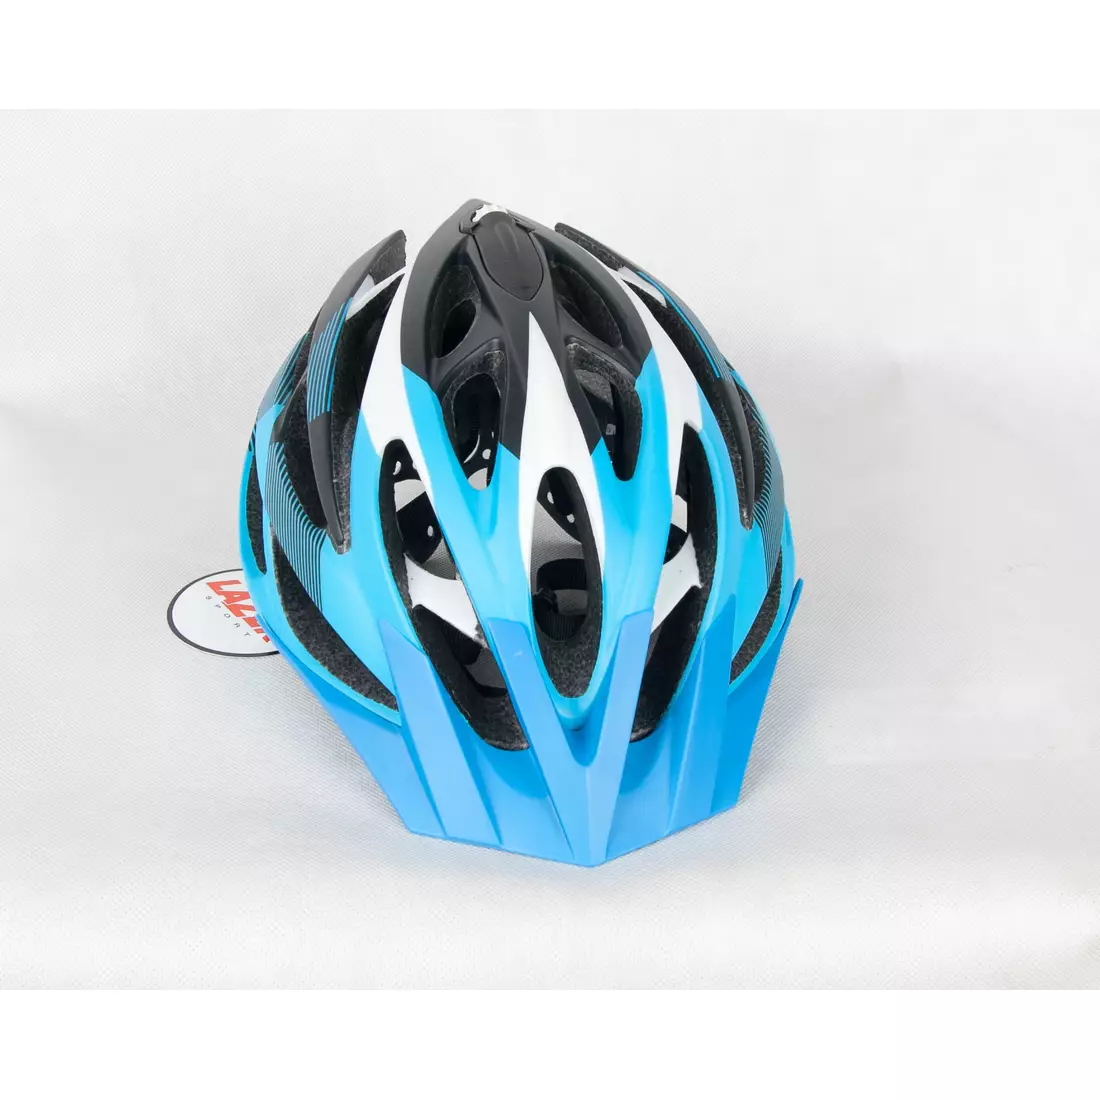 LAZER ROX bicycle helmet matt blue